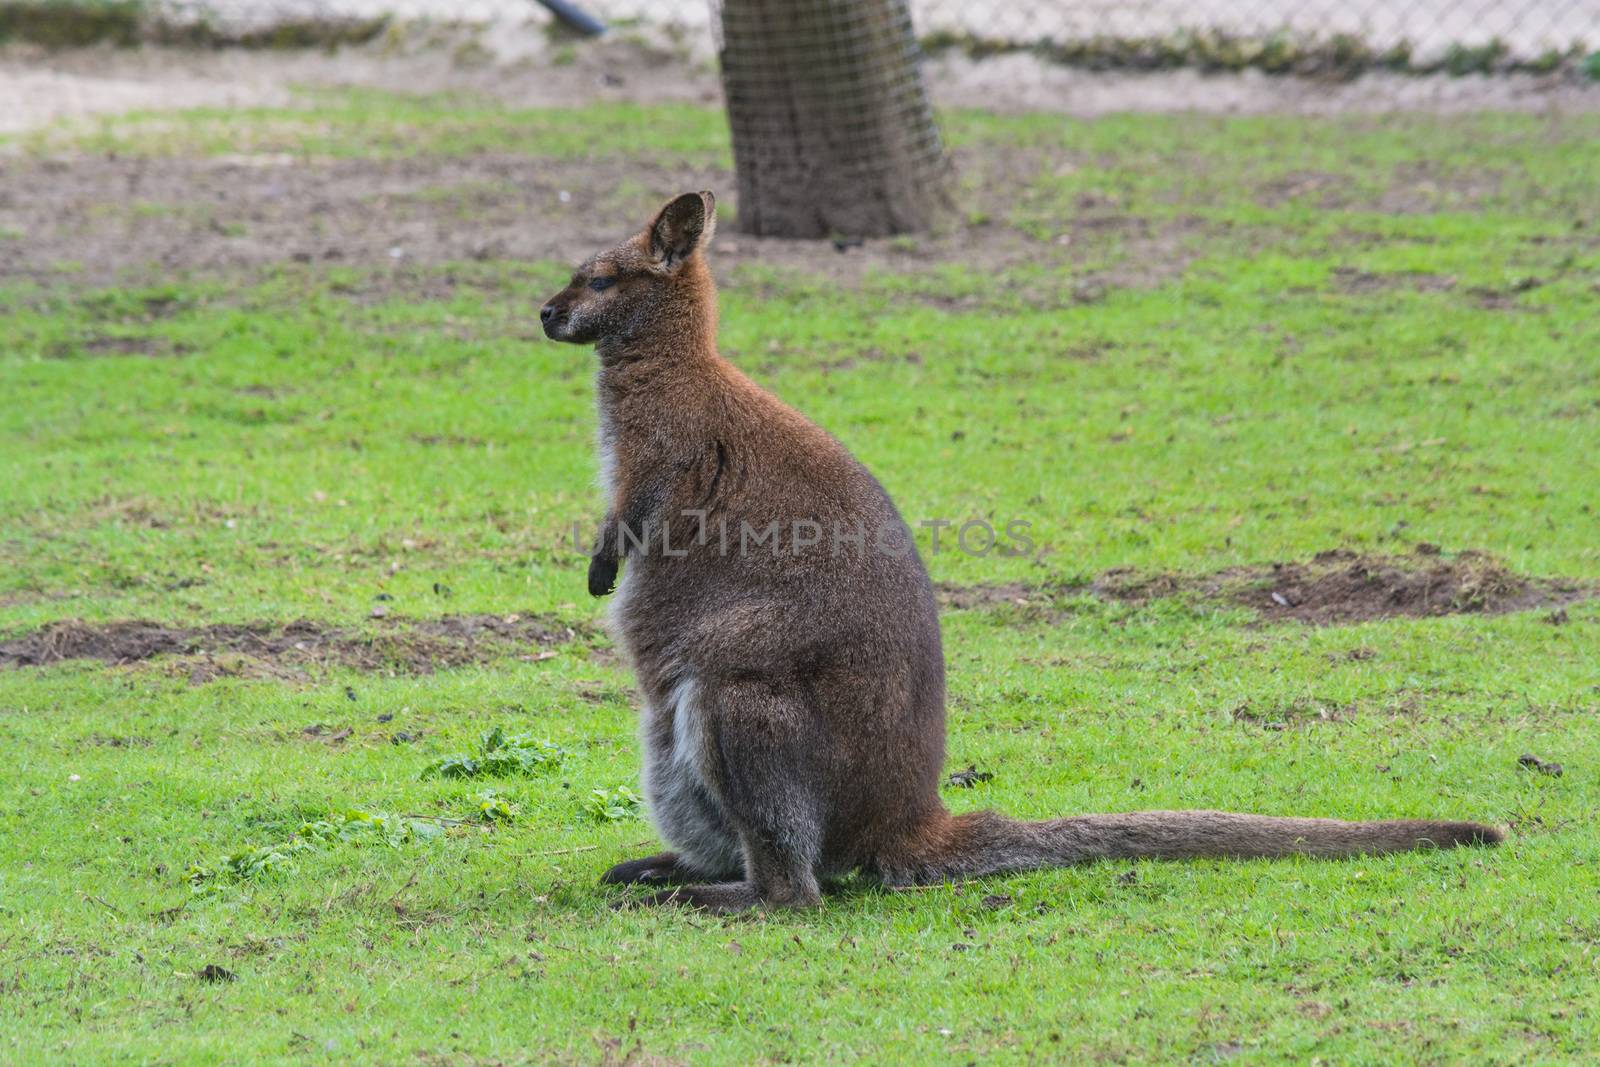 Kangaroo in its natural habitat by JFsPic